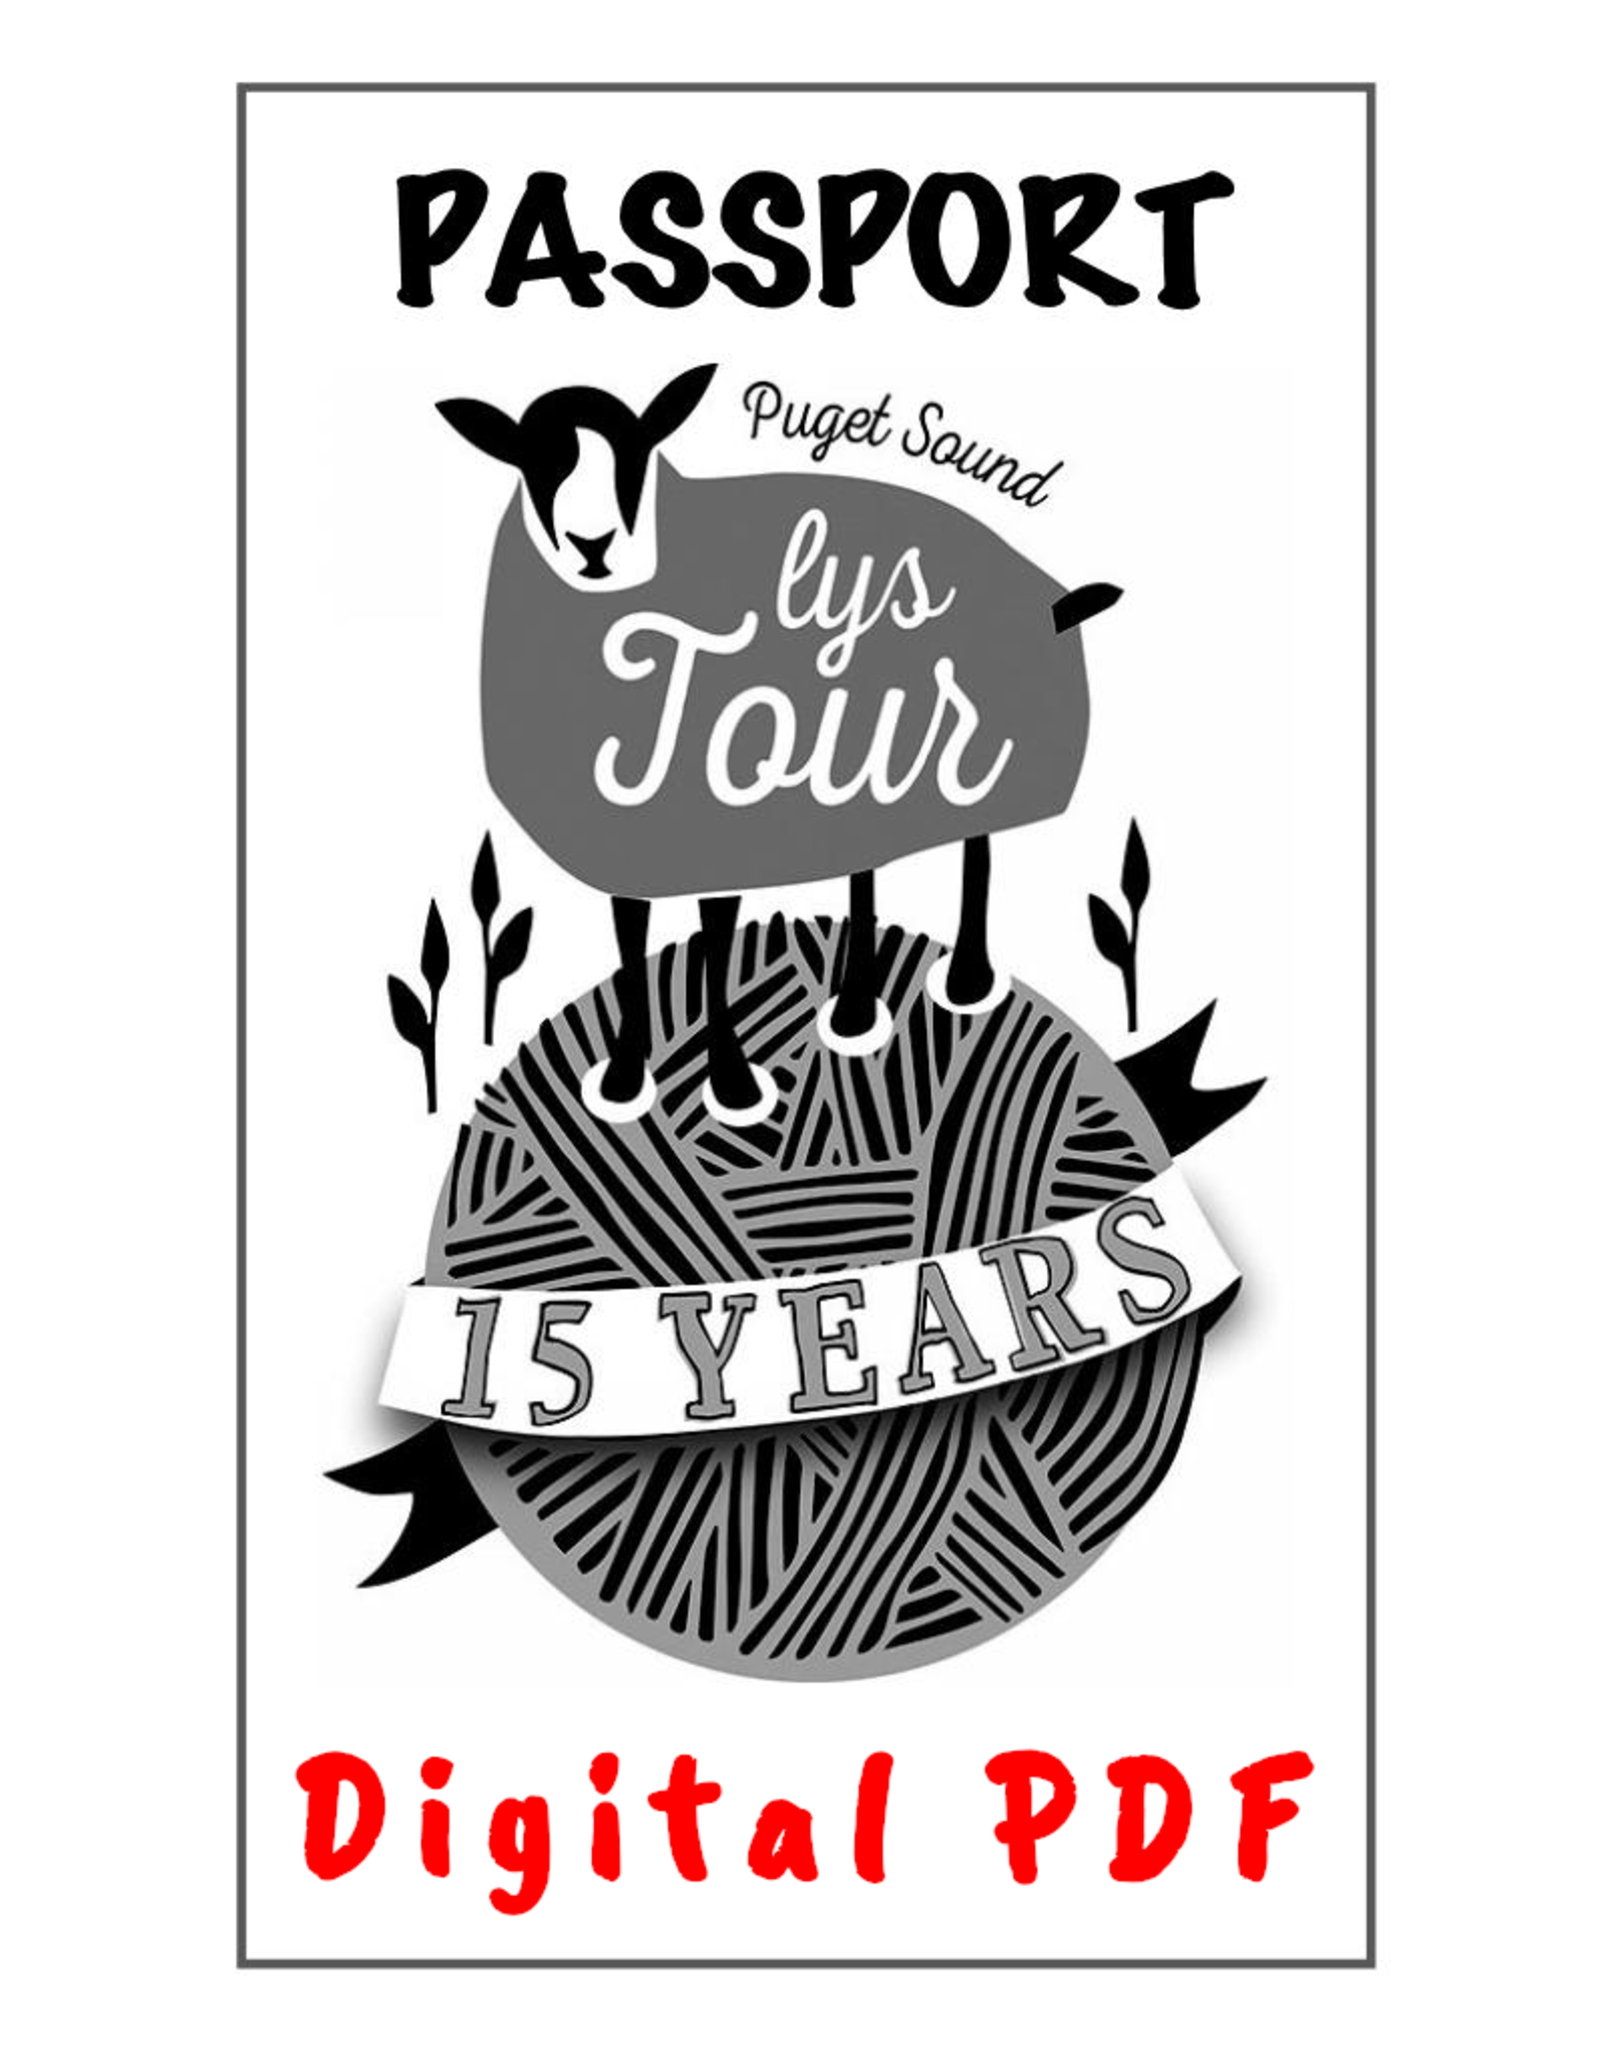 Puget Sound LYS Tour 2021 LYS Tour - Passport Digital PDF Download